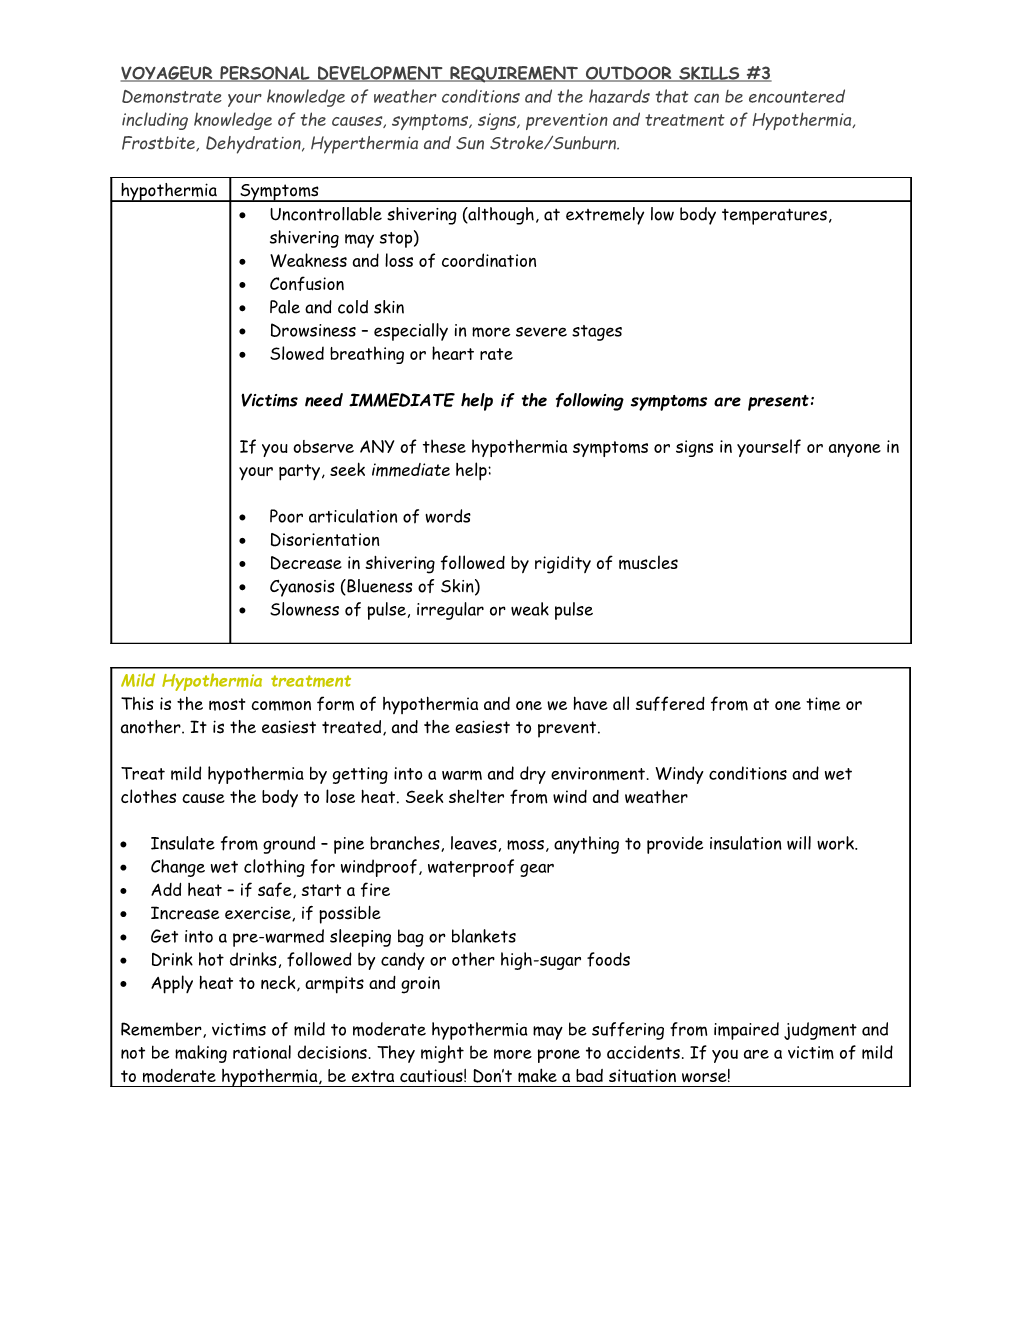 Voyageur Personal Development Requirement Outdoor Skills #3